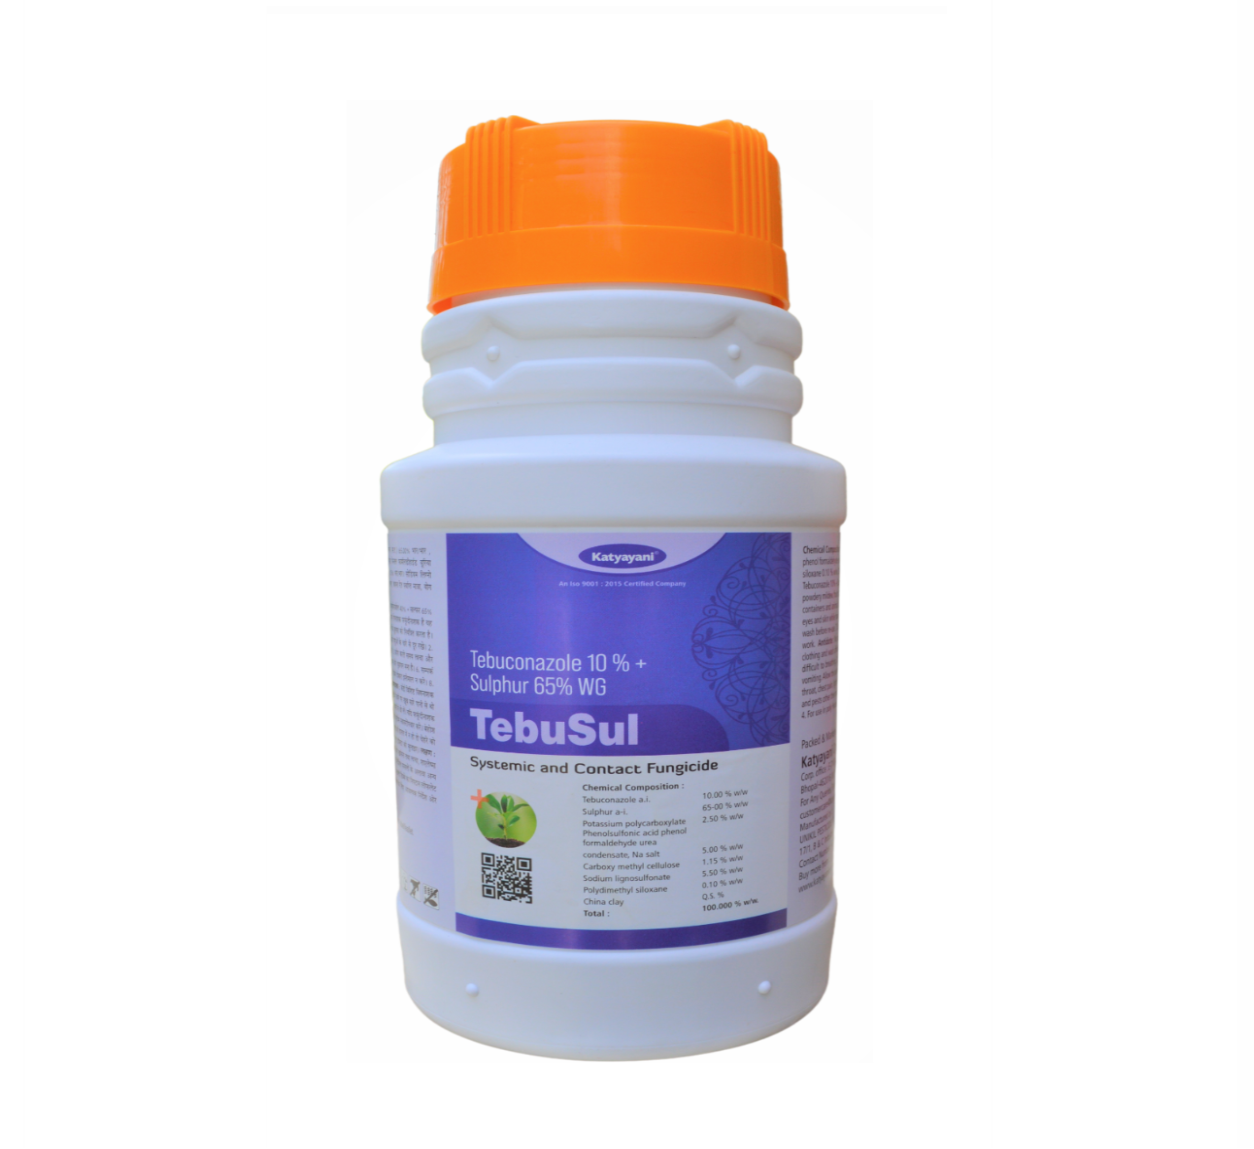 Tebuconazole 10 % + sulphur 65 % wg TEBUSUL